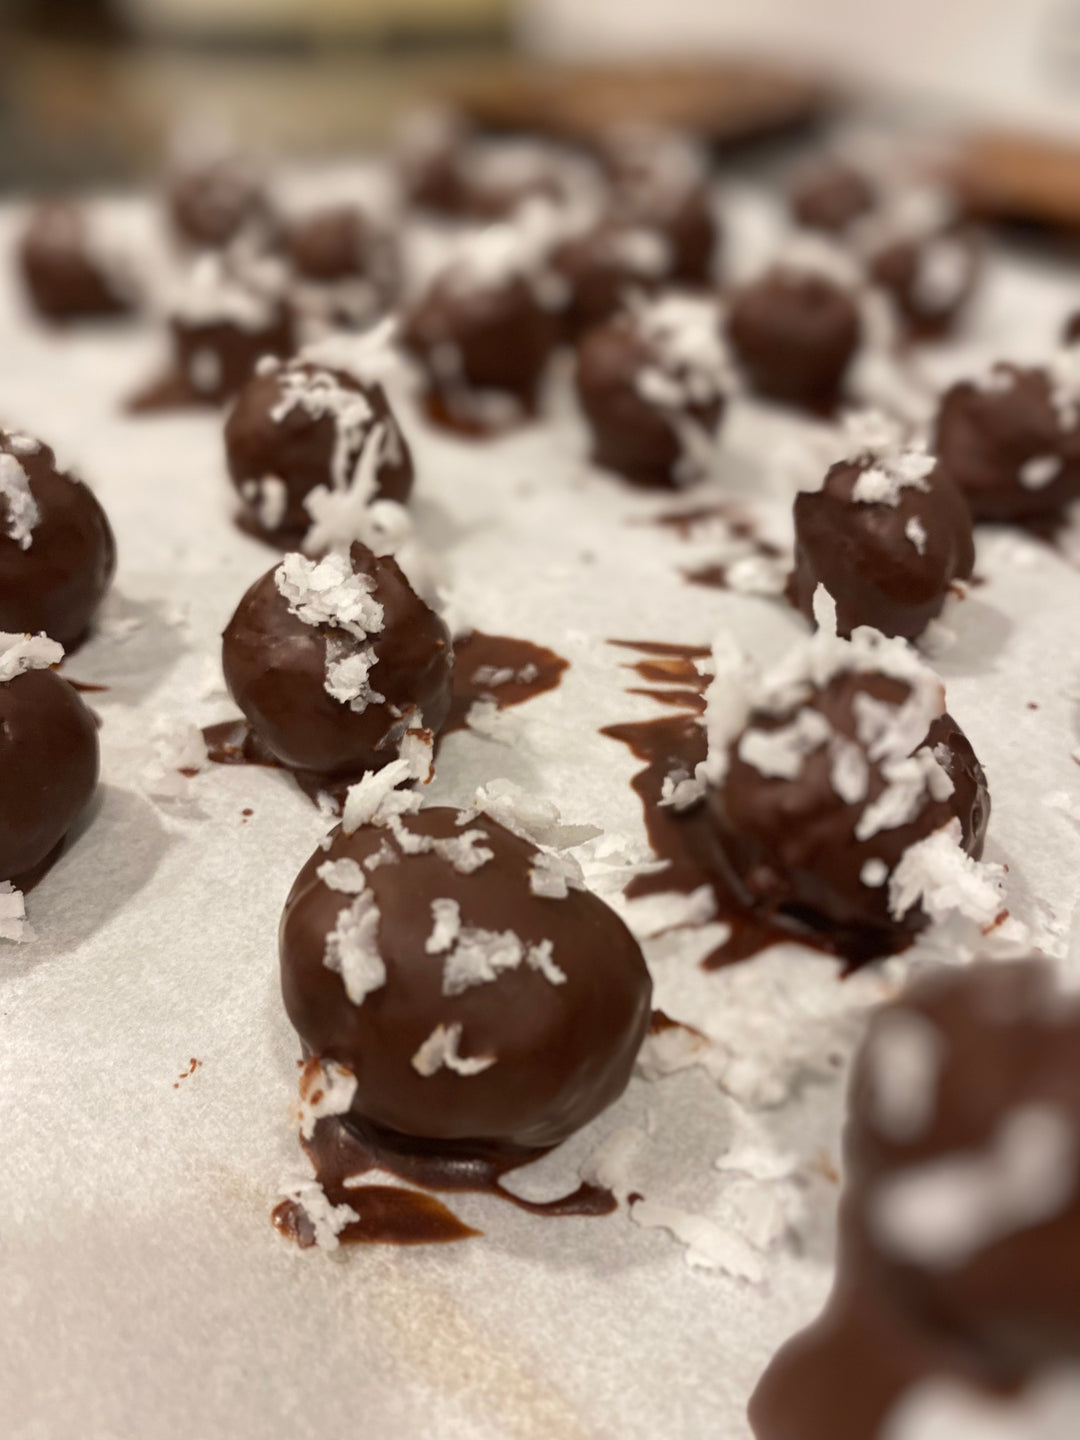 Chocolate Domes "The Swedish Chocolate Ball" 2 pcs